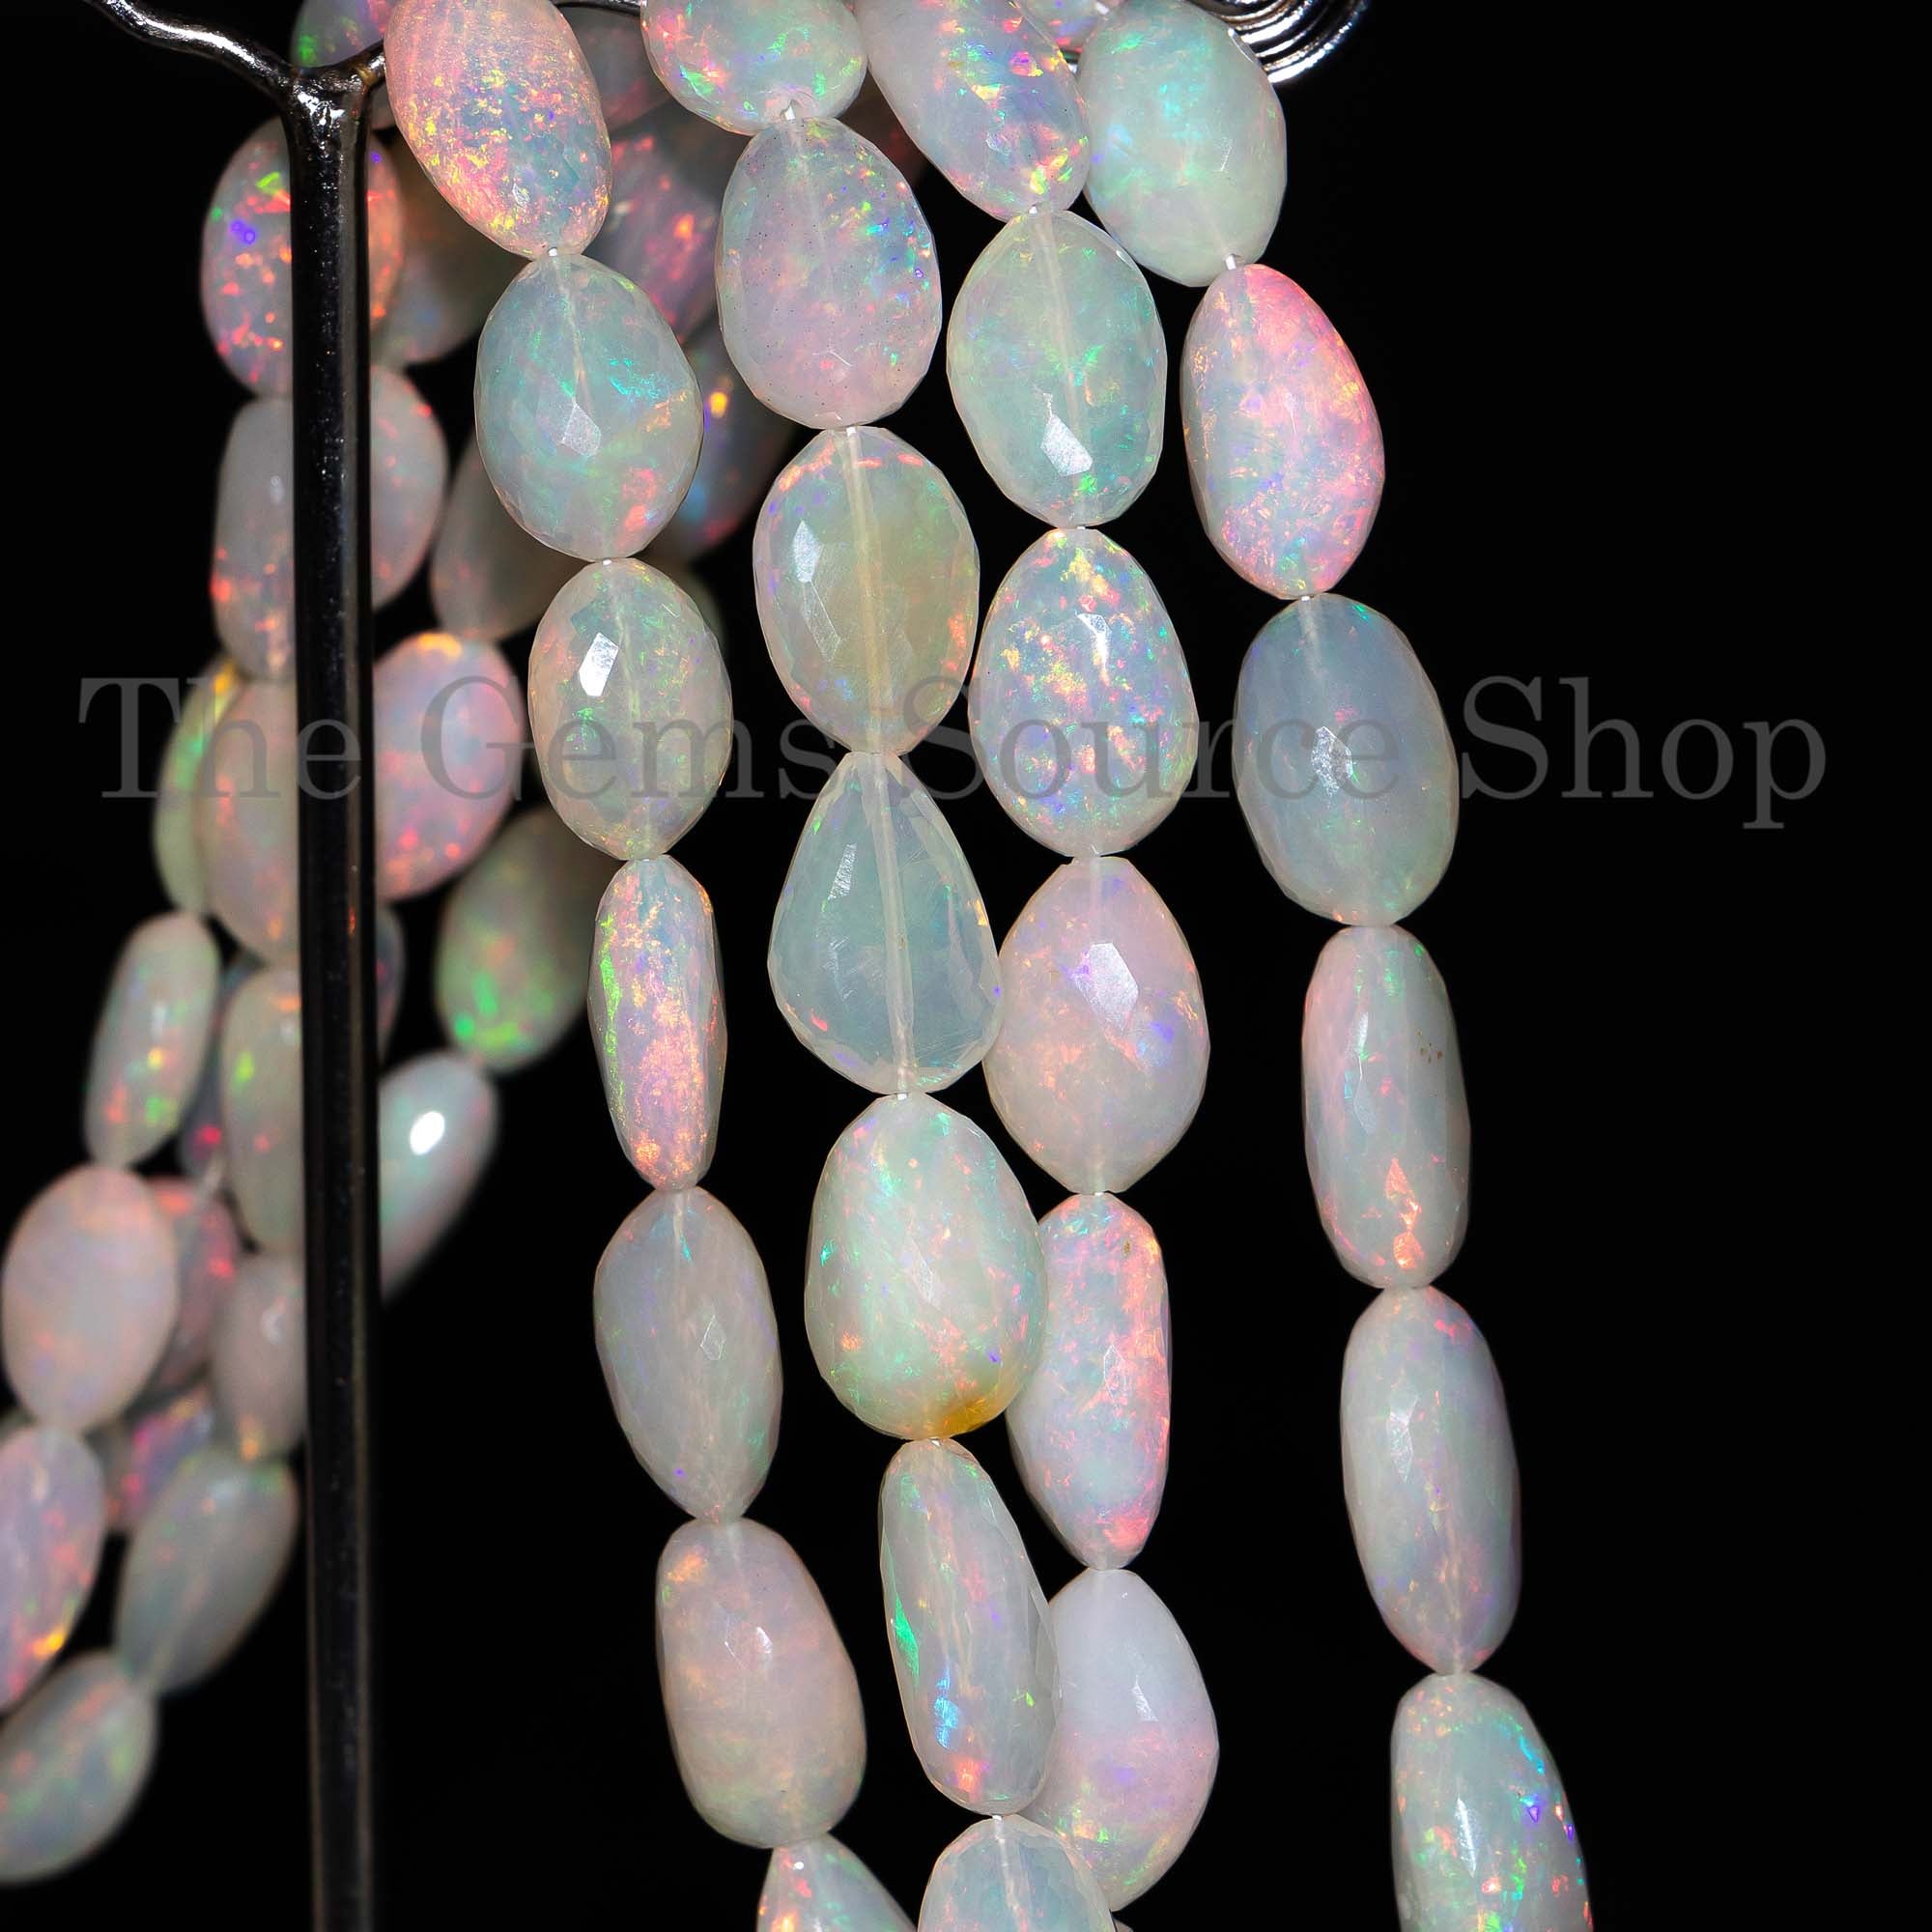 Big Size Ethiopian Opal Nuggets, Ethiopian Opal Beads, Top Quality Opal Beads, 6.5x9-10x19mm Opal Nuggets Beads, Ethiopian Opal Fancy Beads